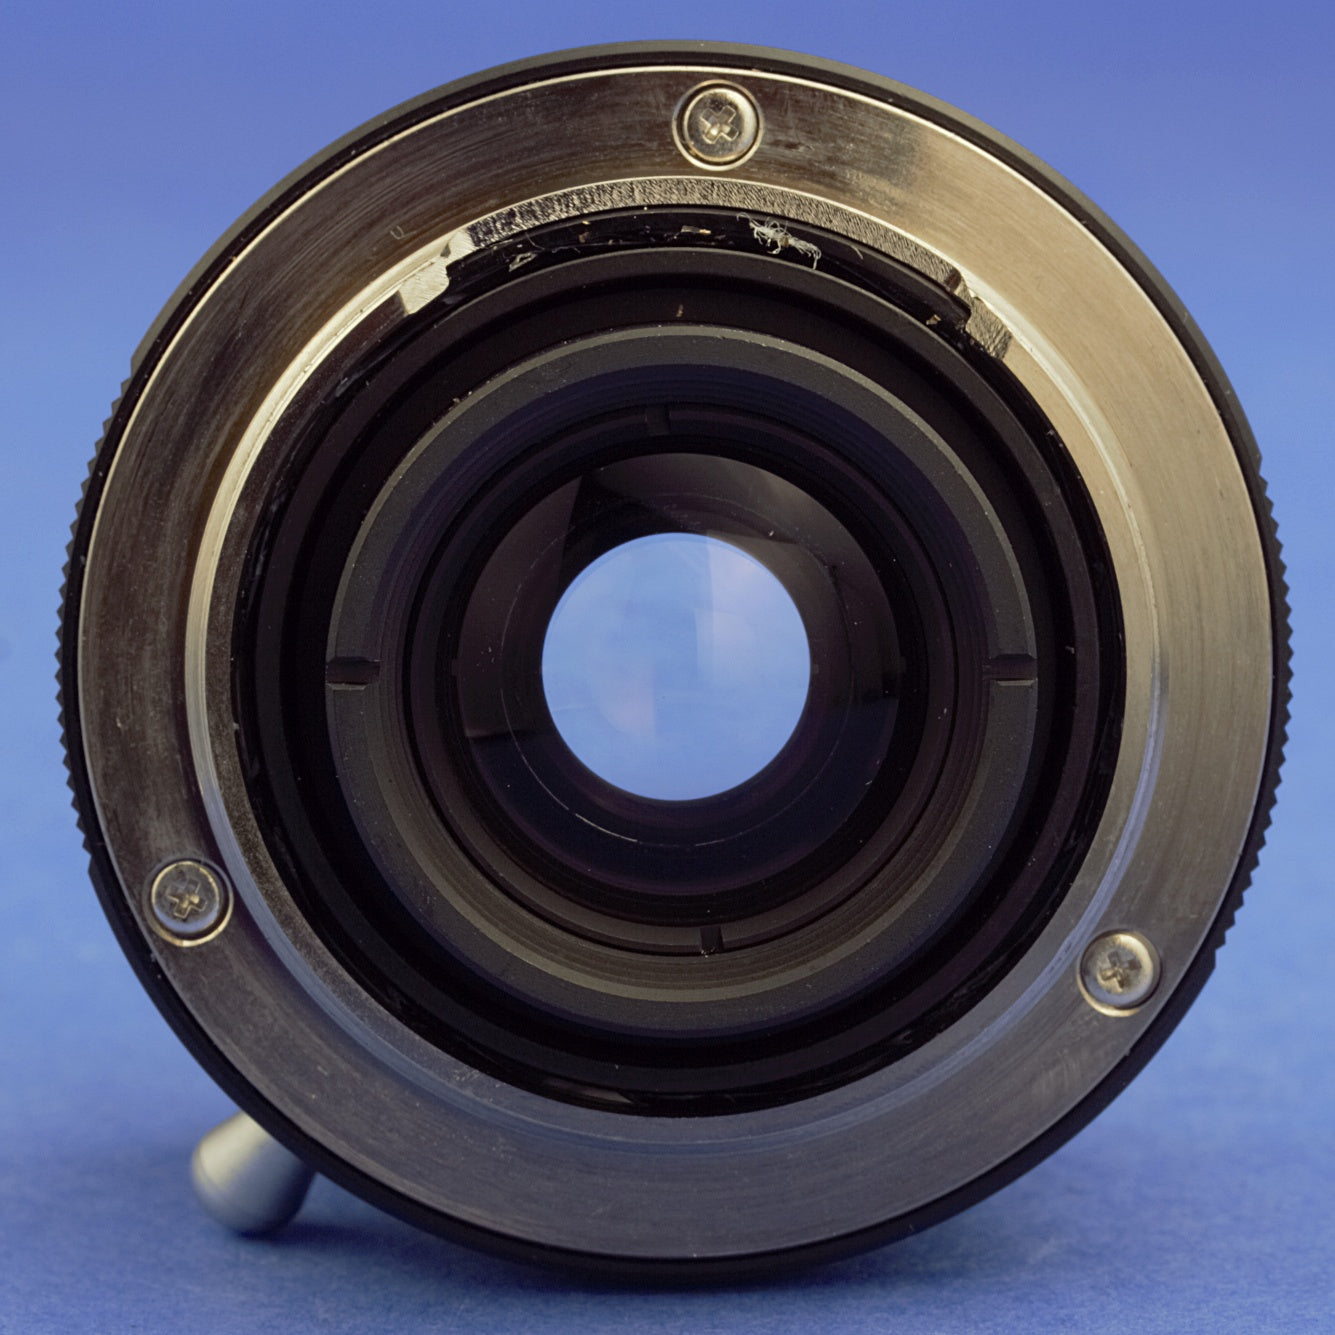 Voigtlander Color-Skopar 35mm F2.5 MC LTM Lens Near Mint Condition